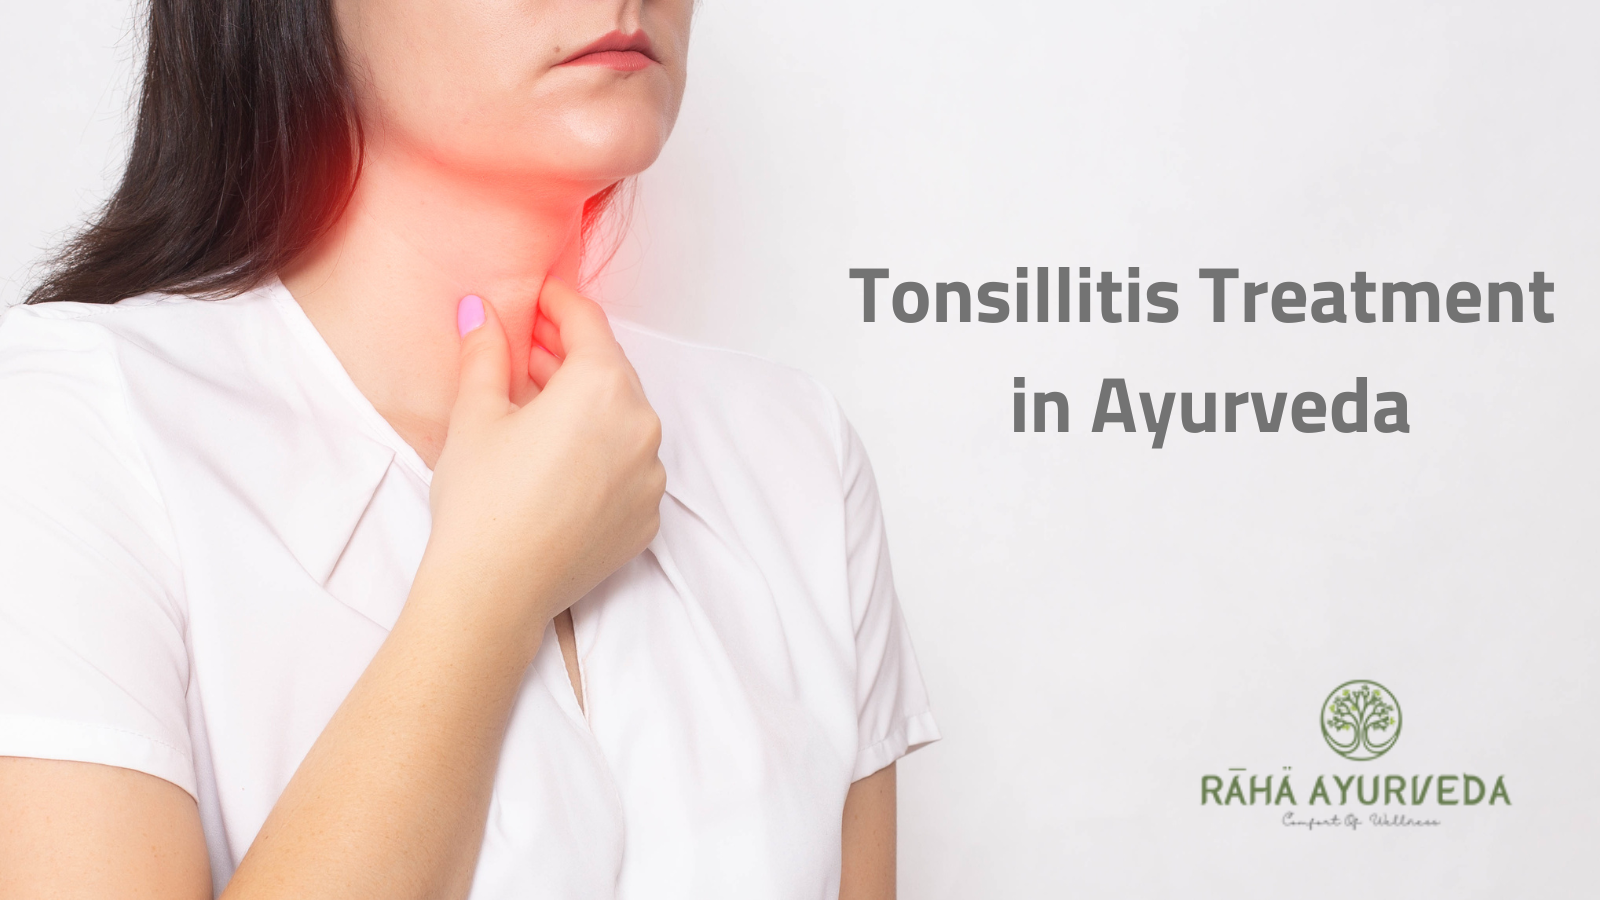 Tonsillitis treatment in Ayurveda